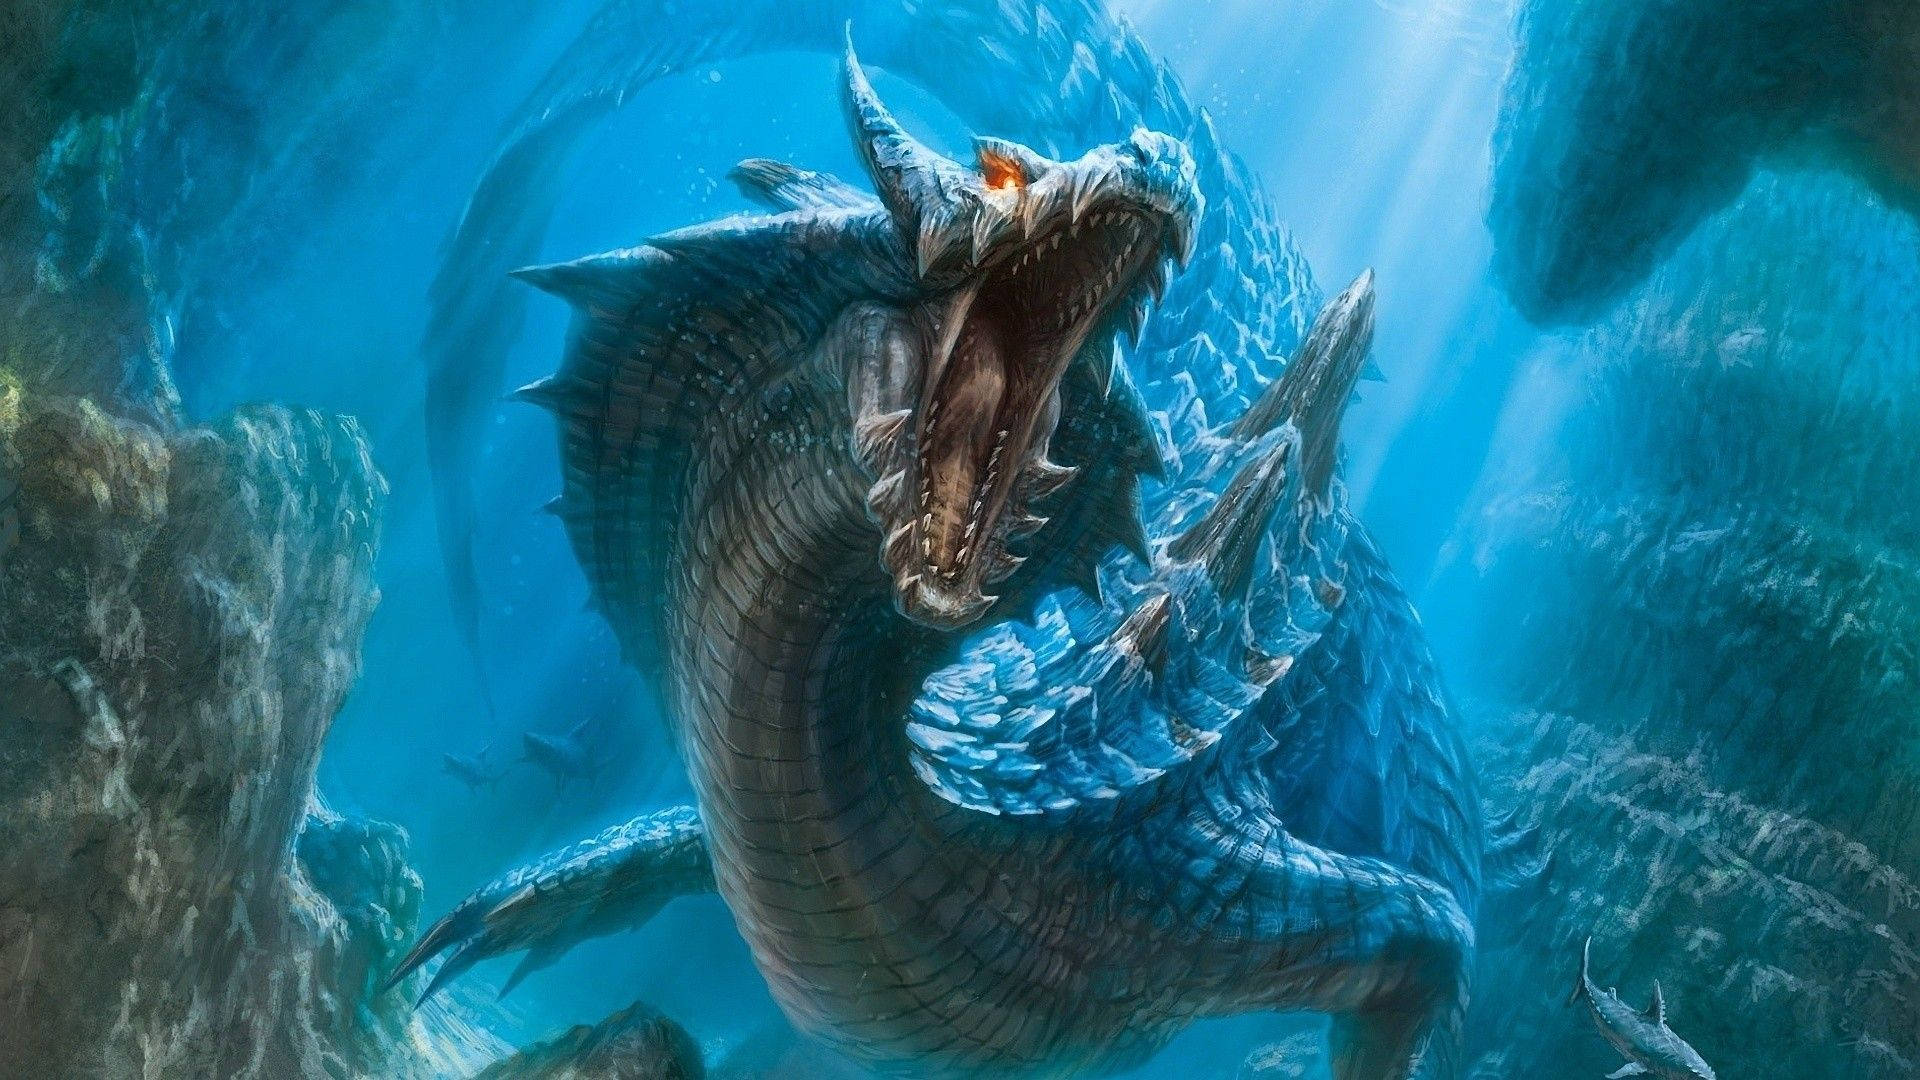 Majestic Japanese Dragon in an Underwater World Wallpaper